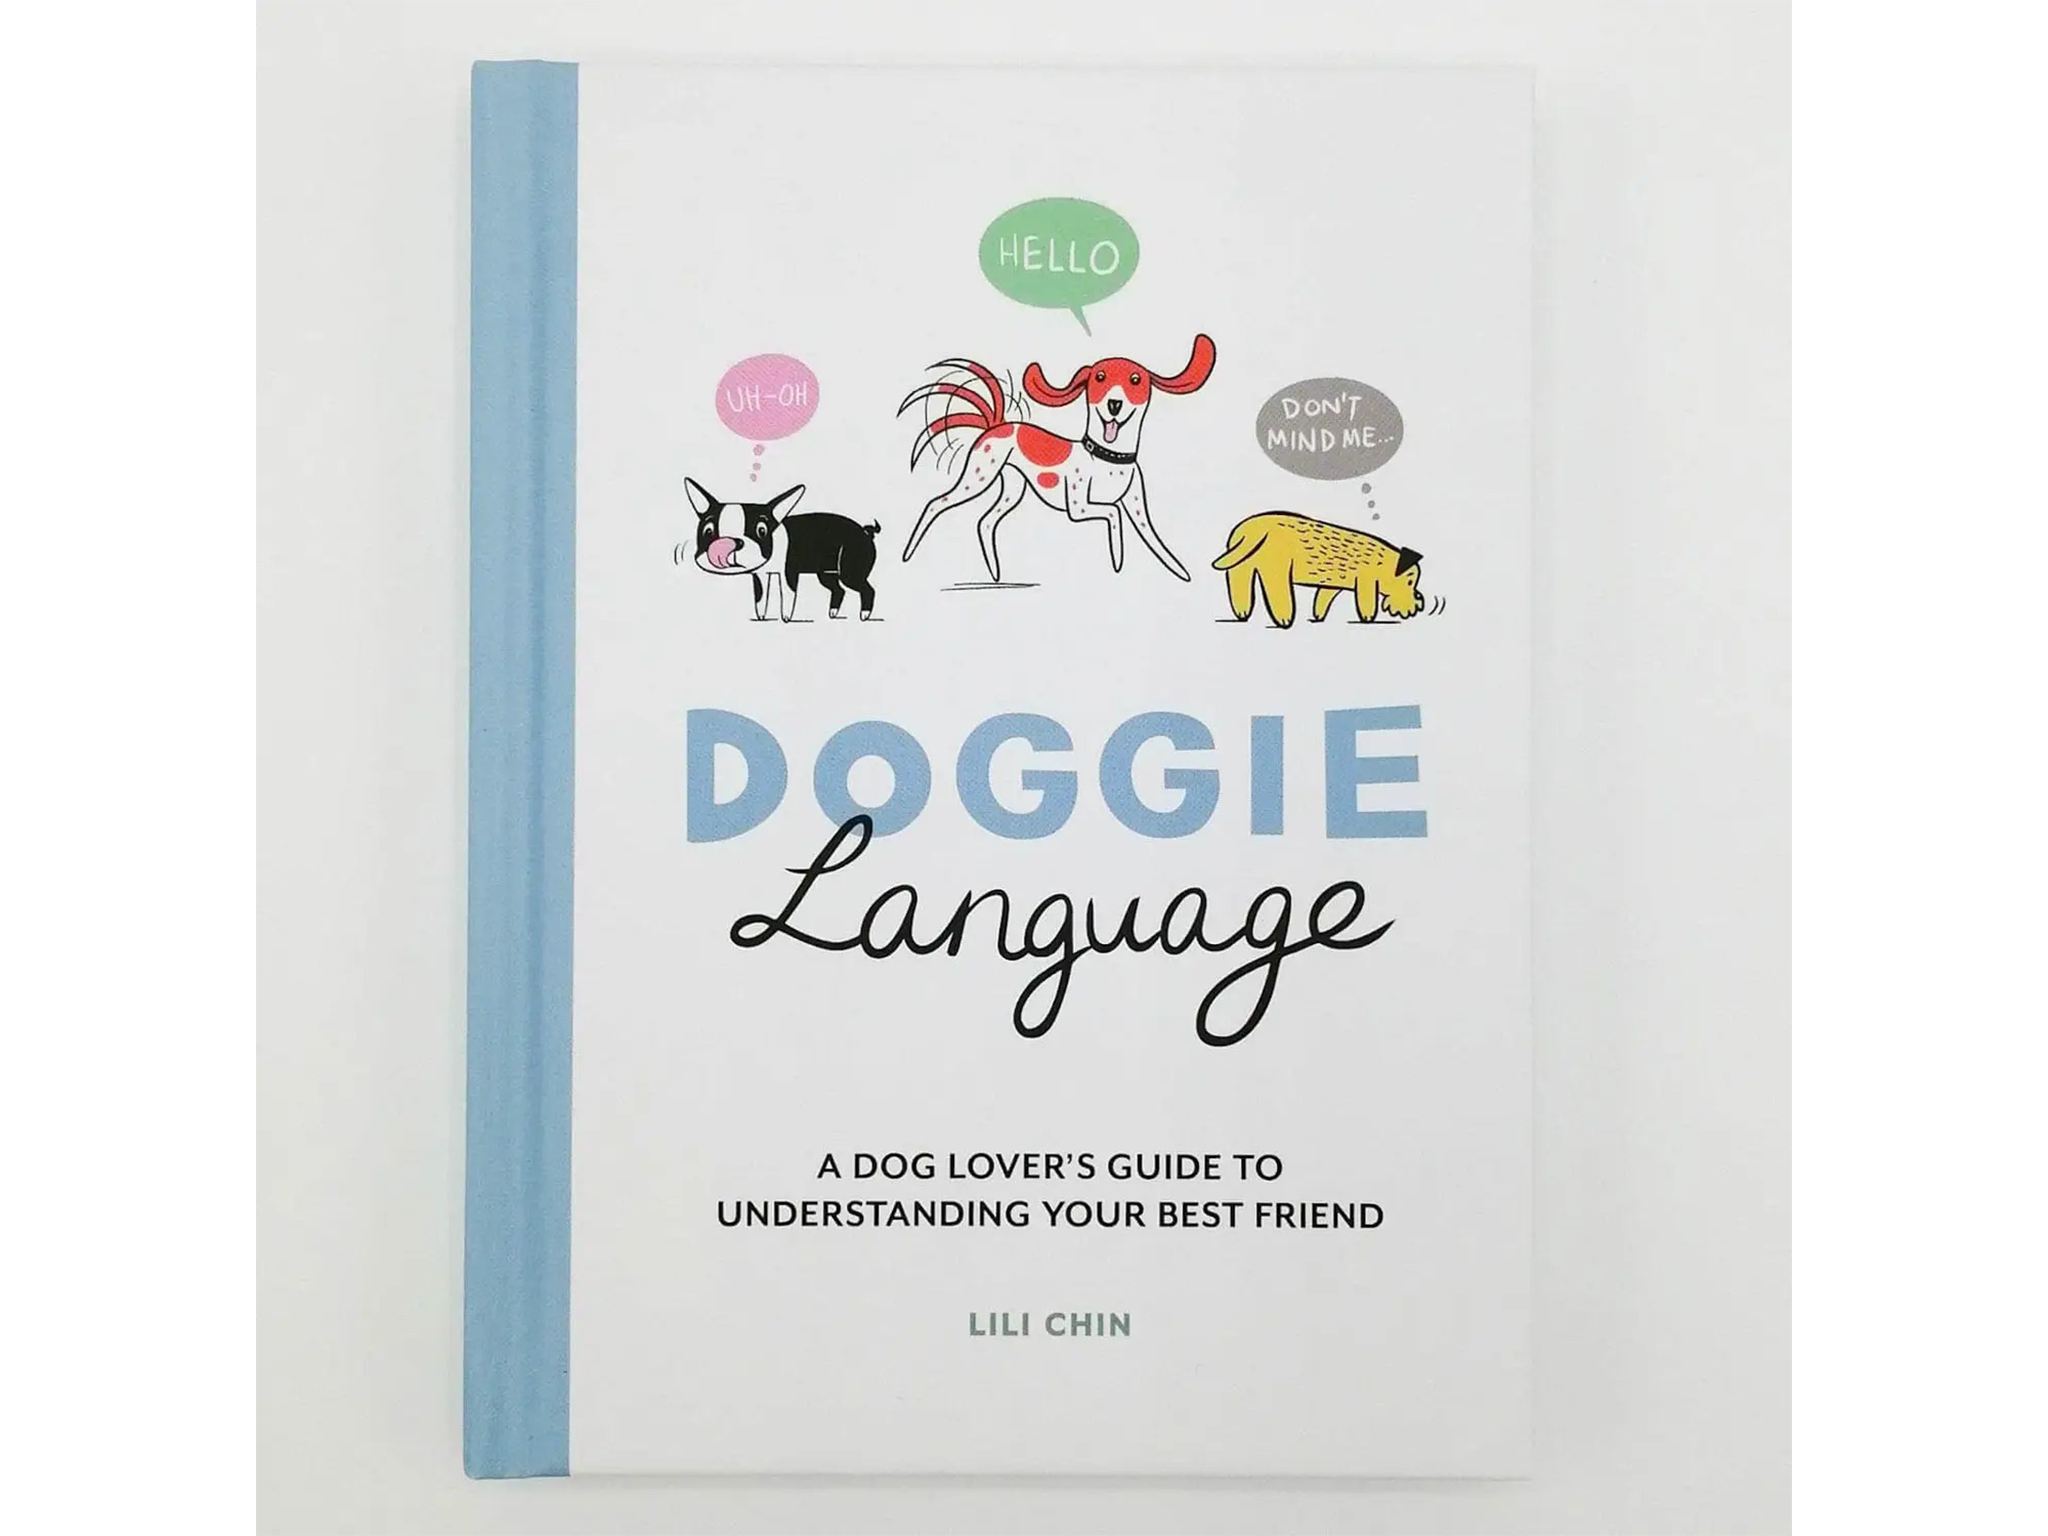 Doggie language books